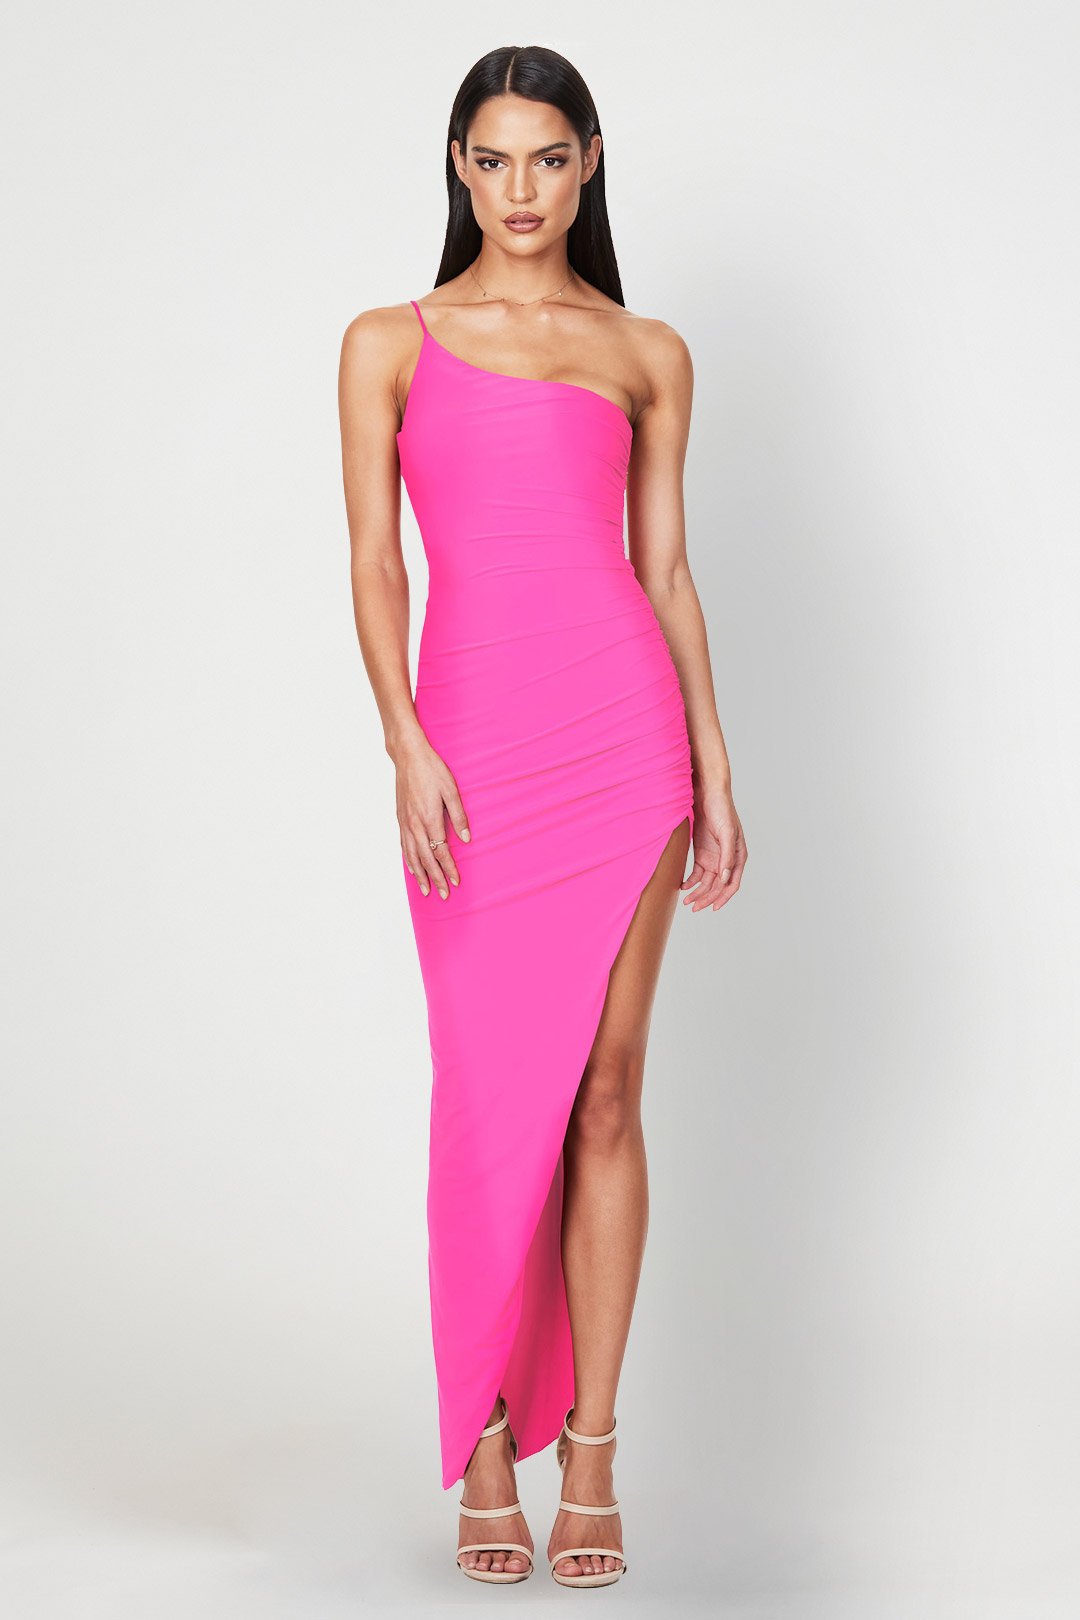 Aria Pink Dress - Nookie Dress Rental